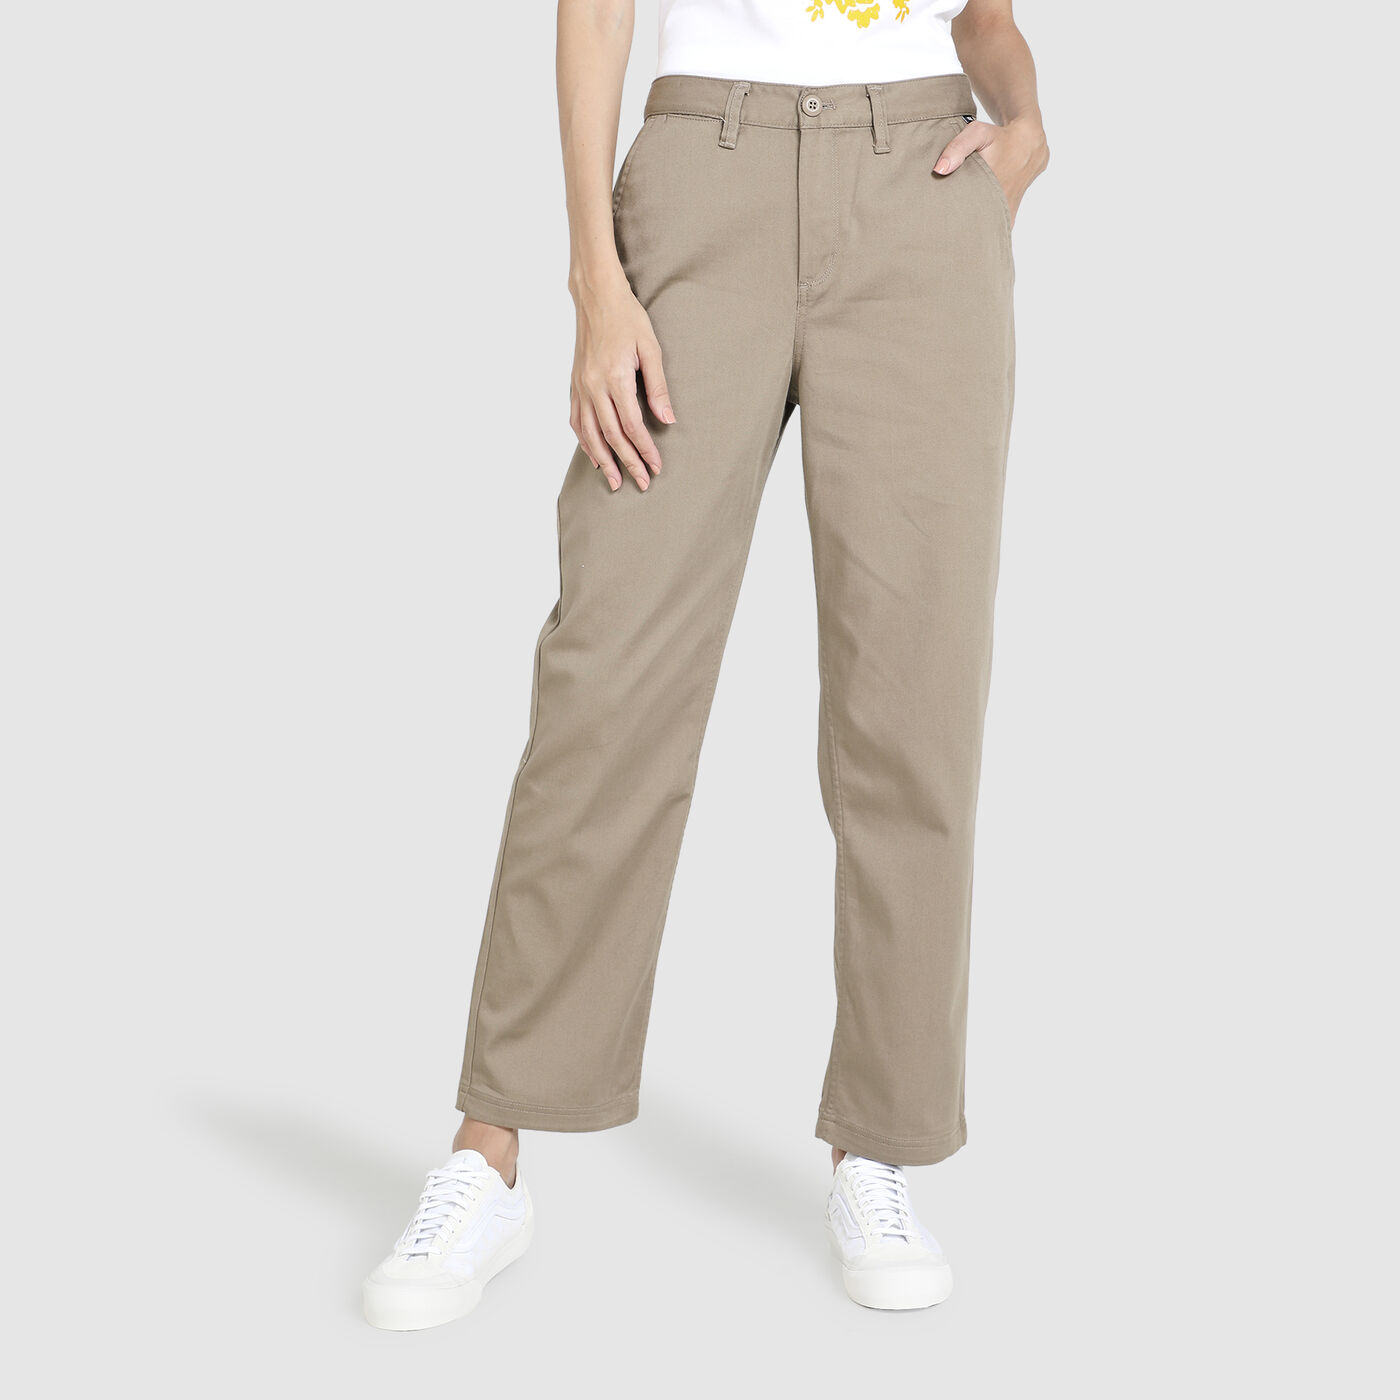 Women's Authentic Chino Pants